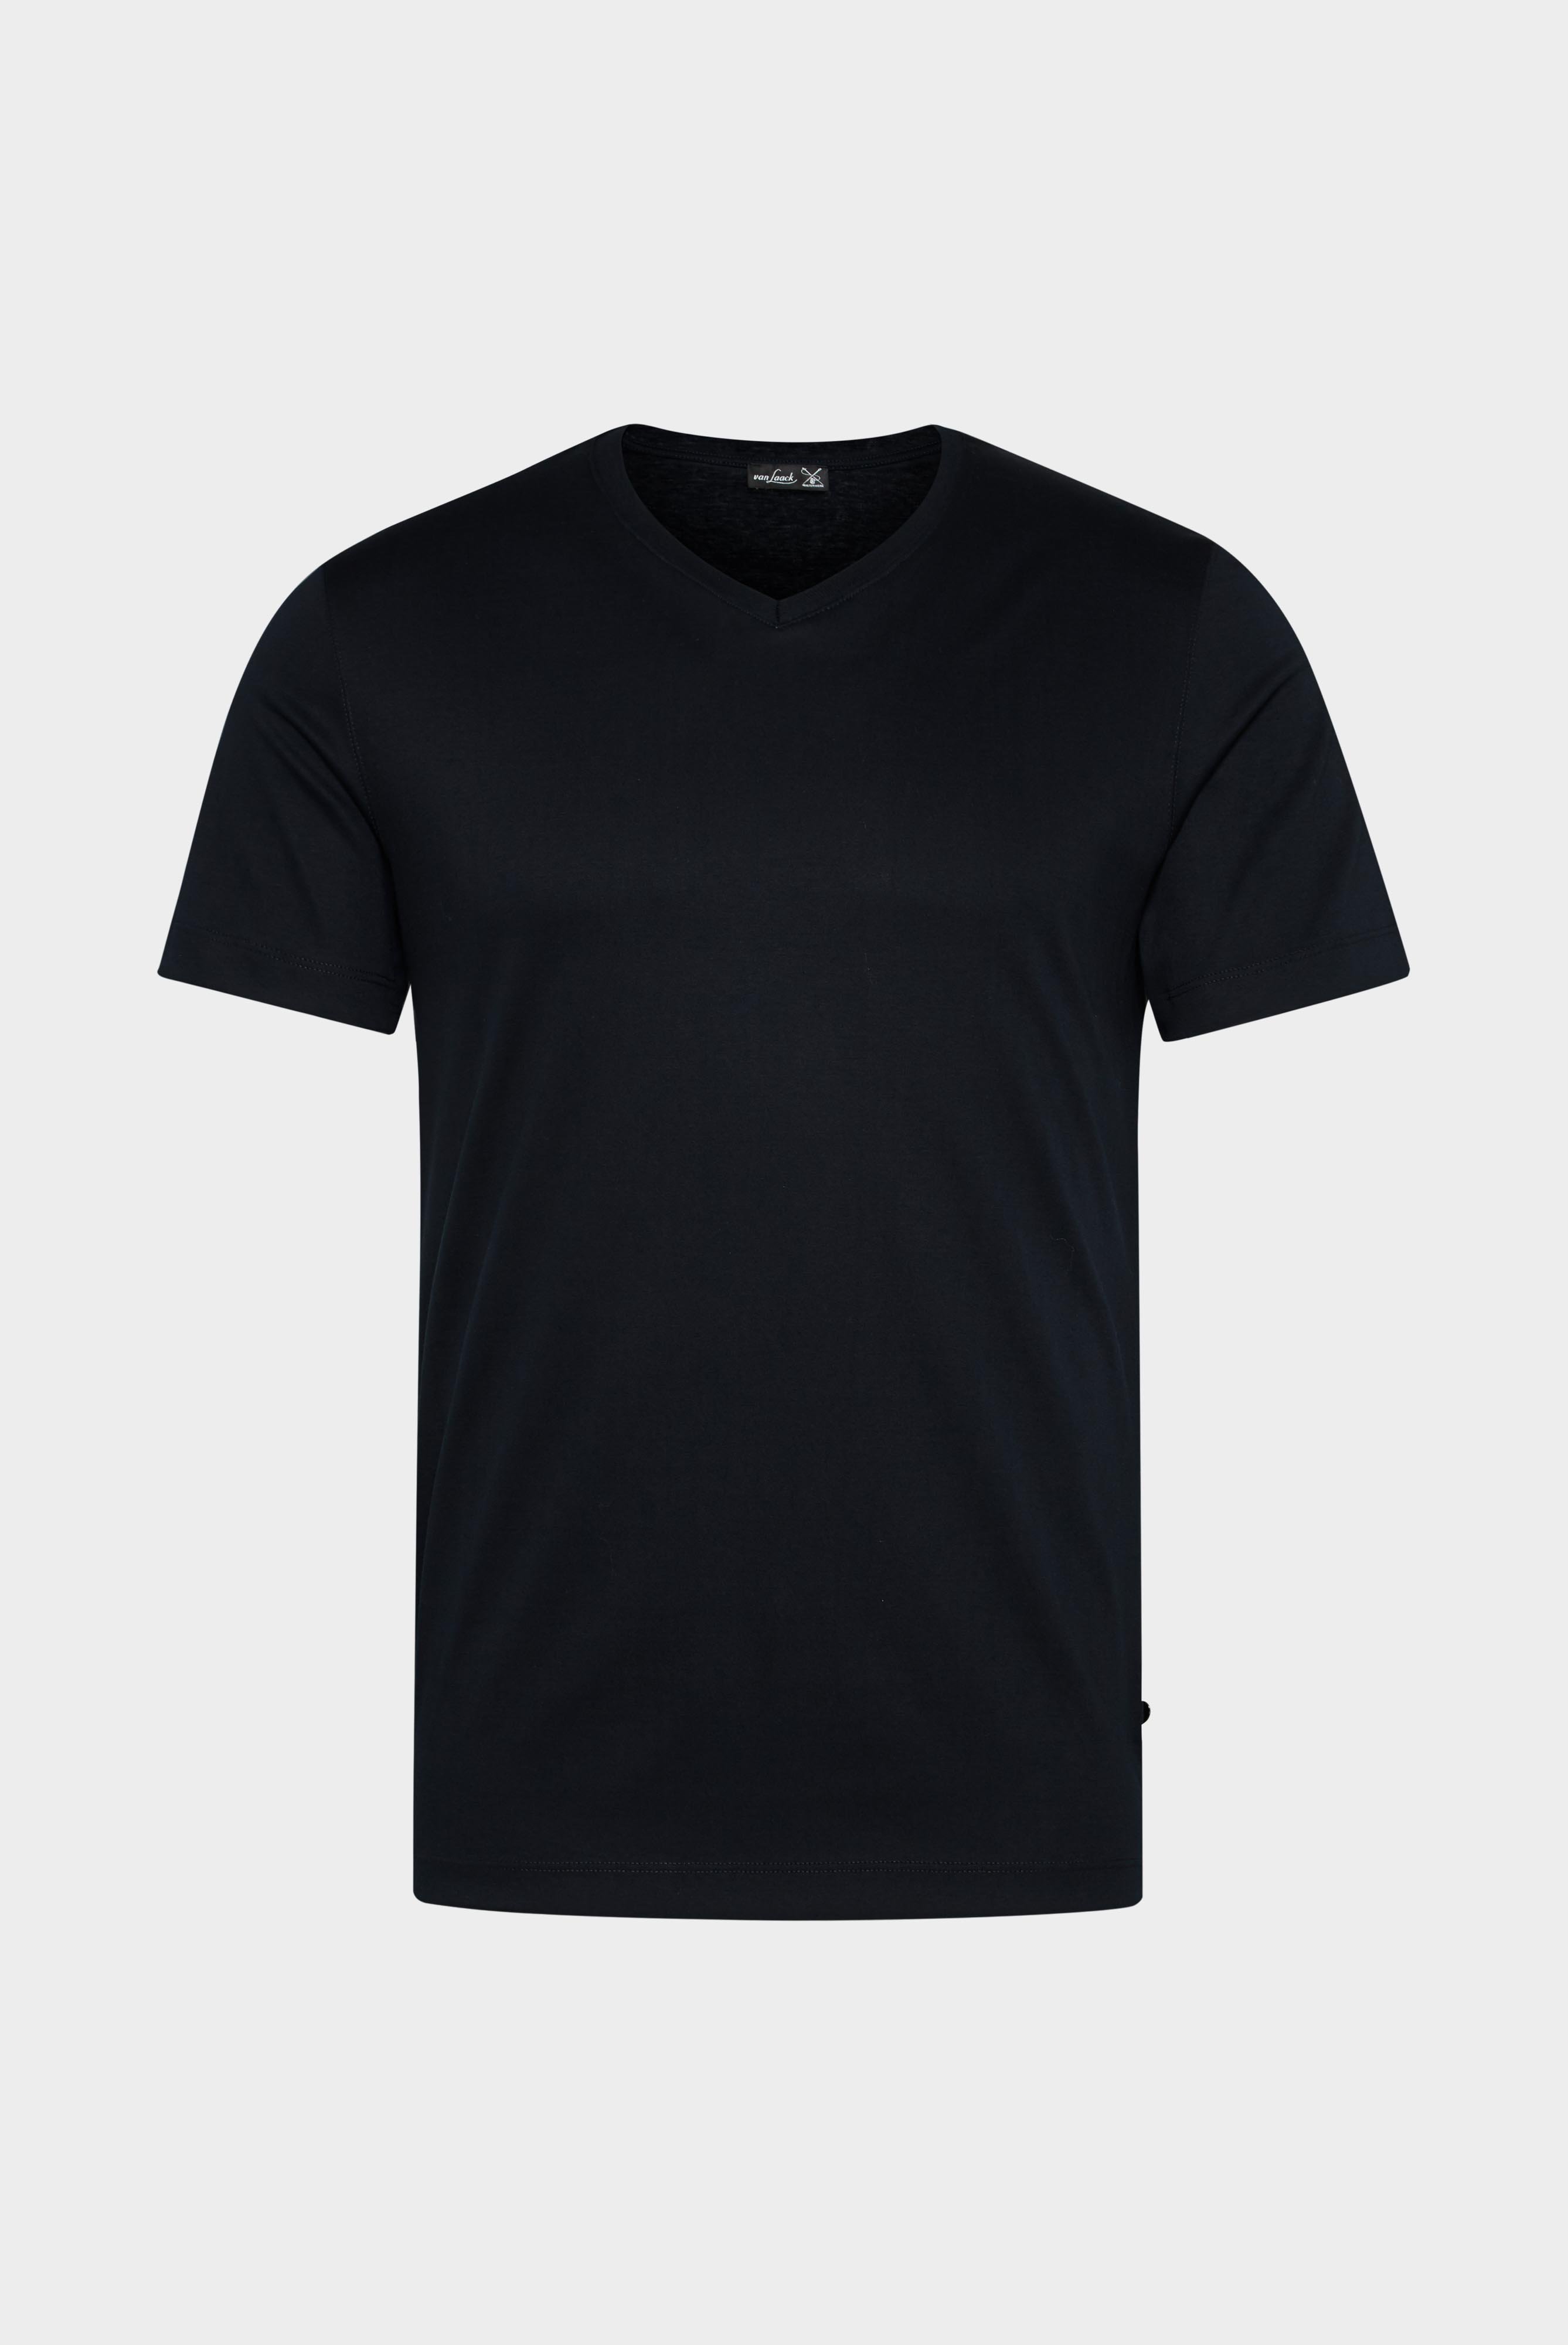 T-Shirts+Swiss Cotton Jersey V-Neck T-Shirt+20.1715.UX.180031.790.L